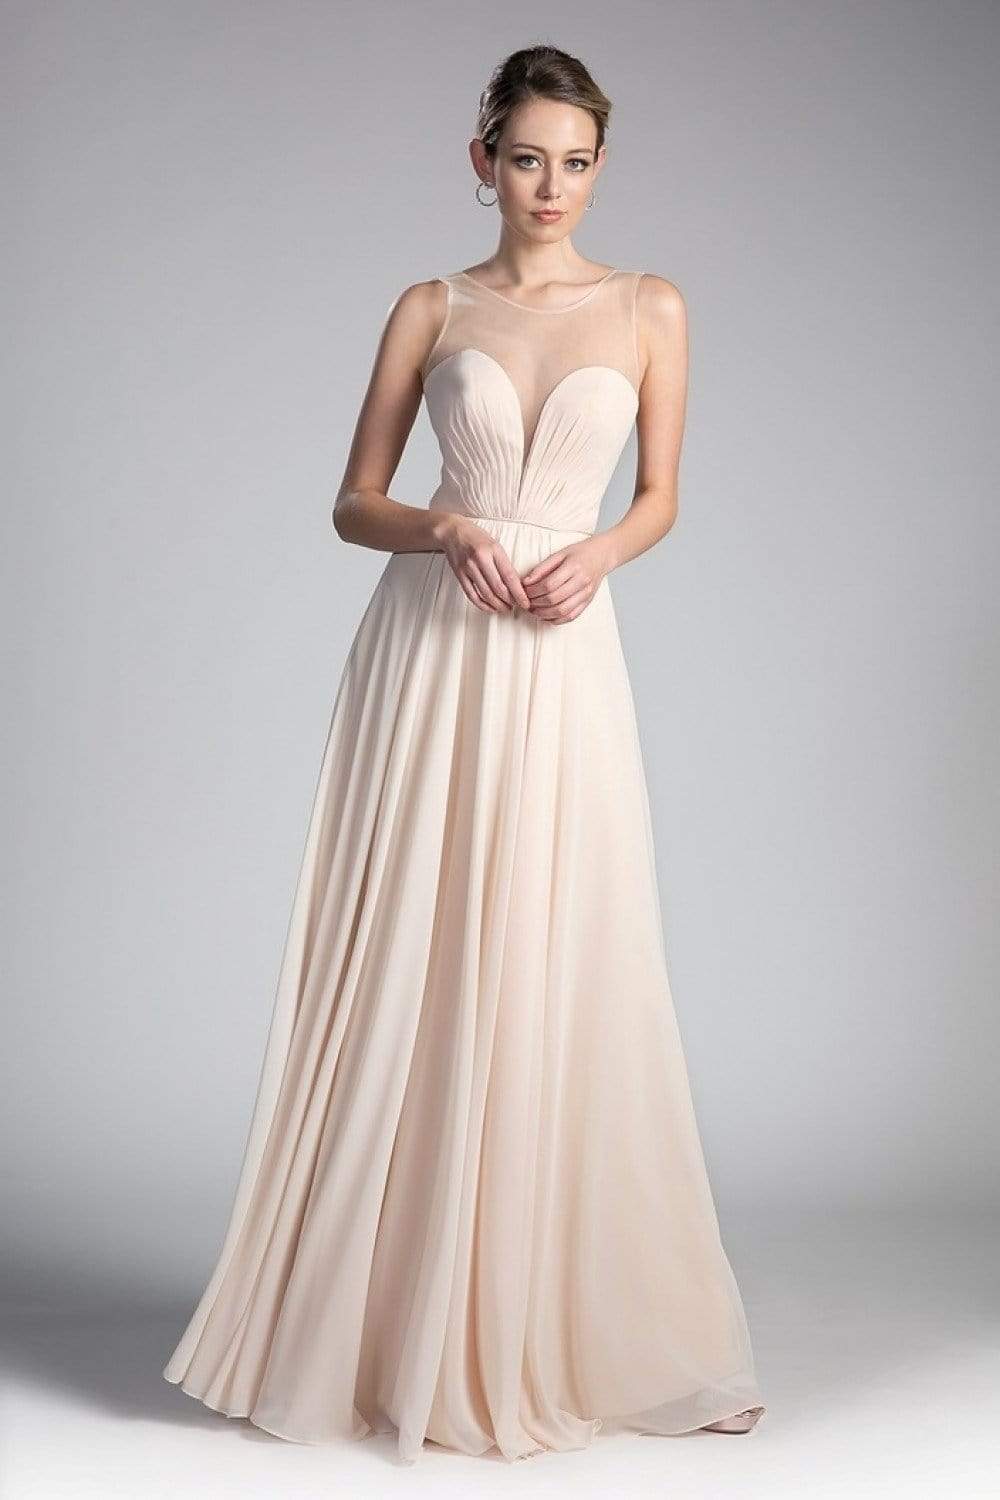 Cinderella Divine - CJ251 Illusion Neckline A-Line Chiffon Dress Evening Dresses 2 / Champagne